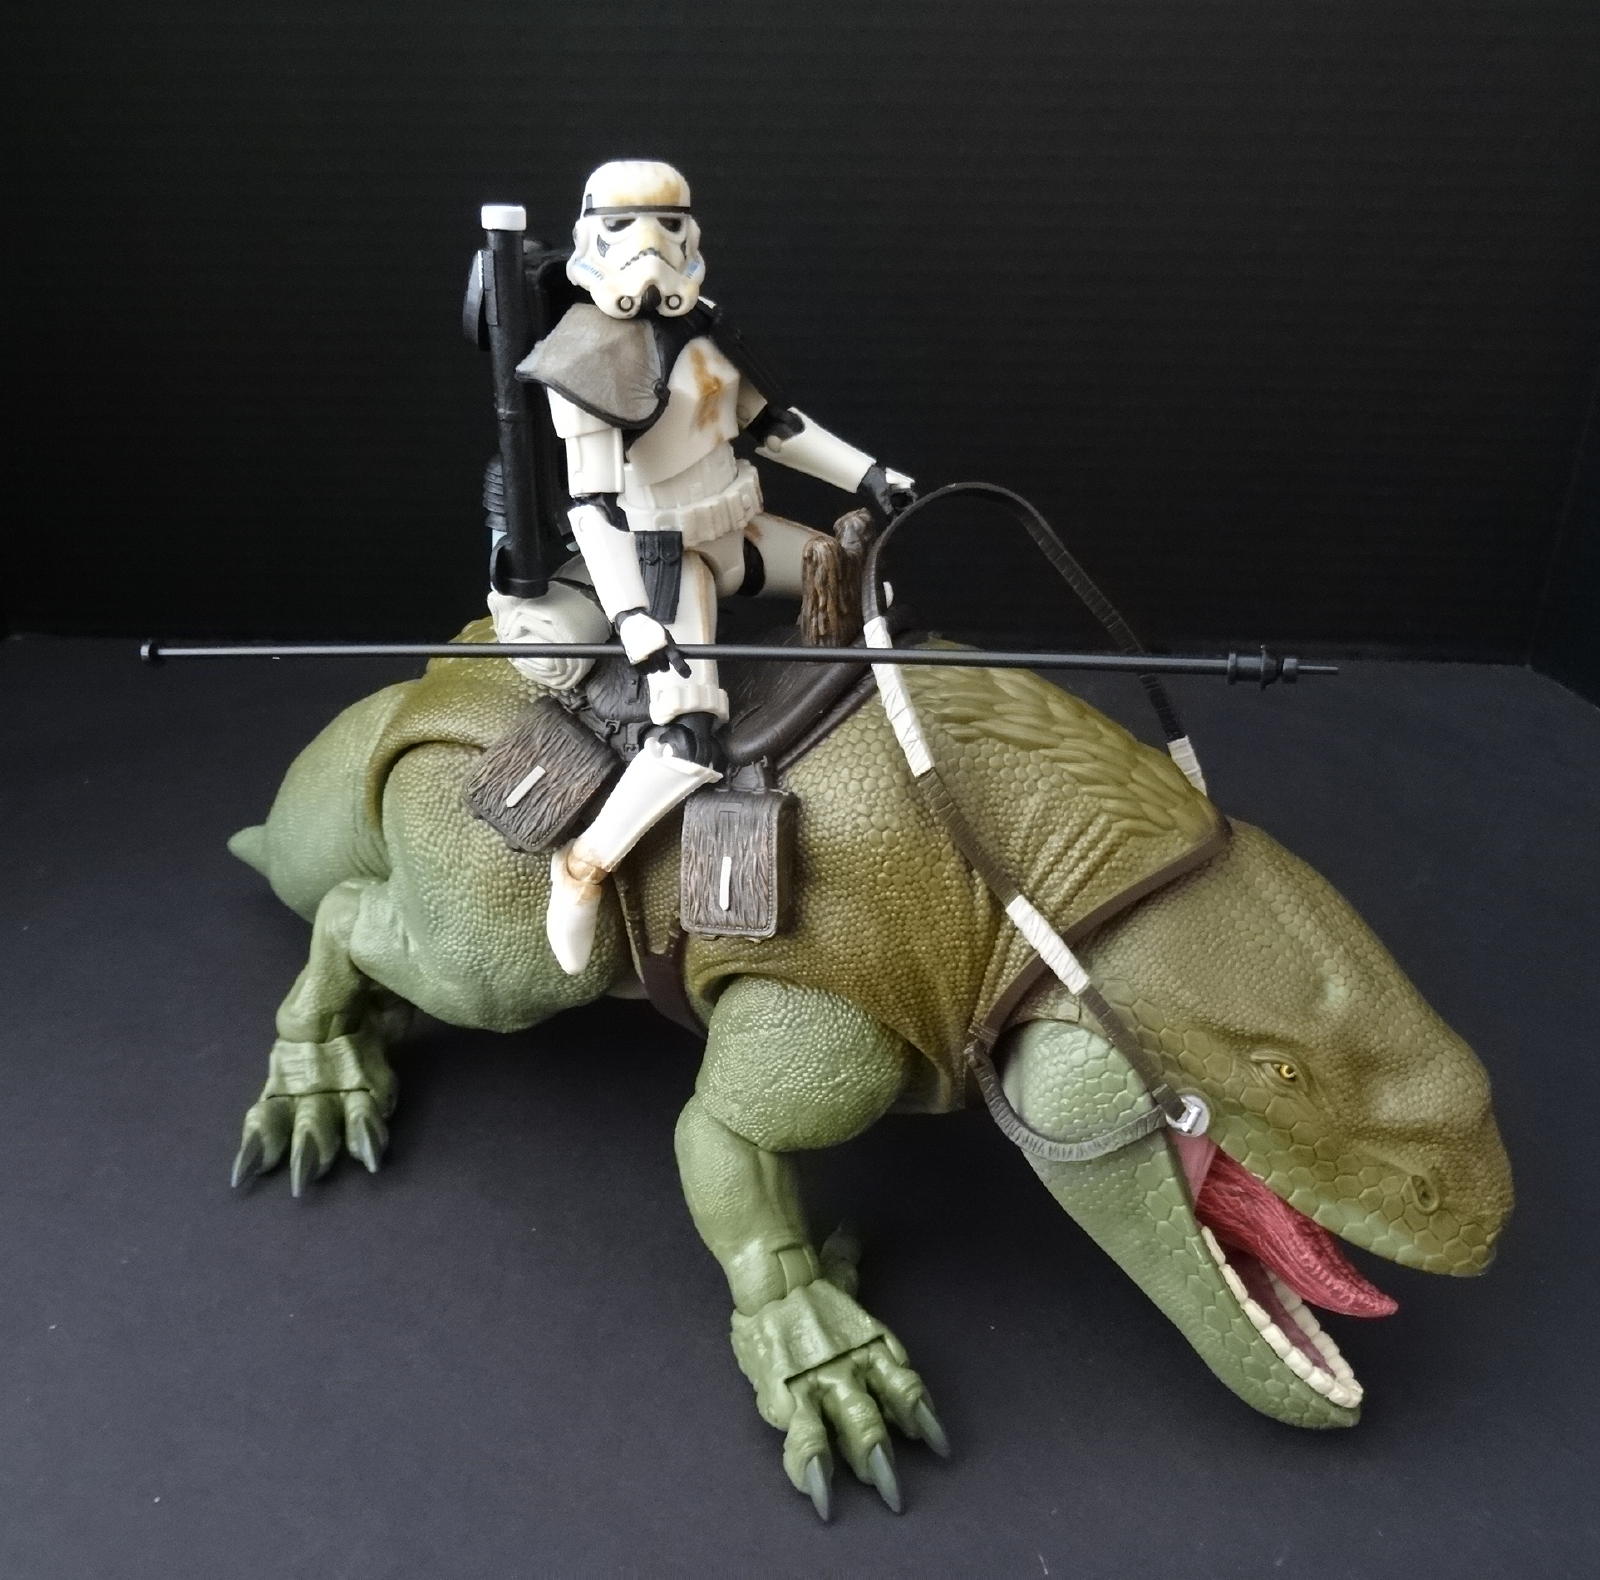 Hasbro Star Wars The Black Series Dewback and Sandtrooper Action Figure for sale online 